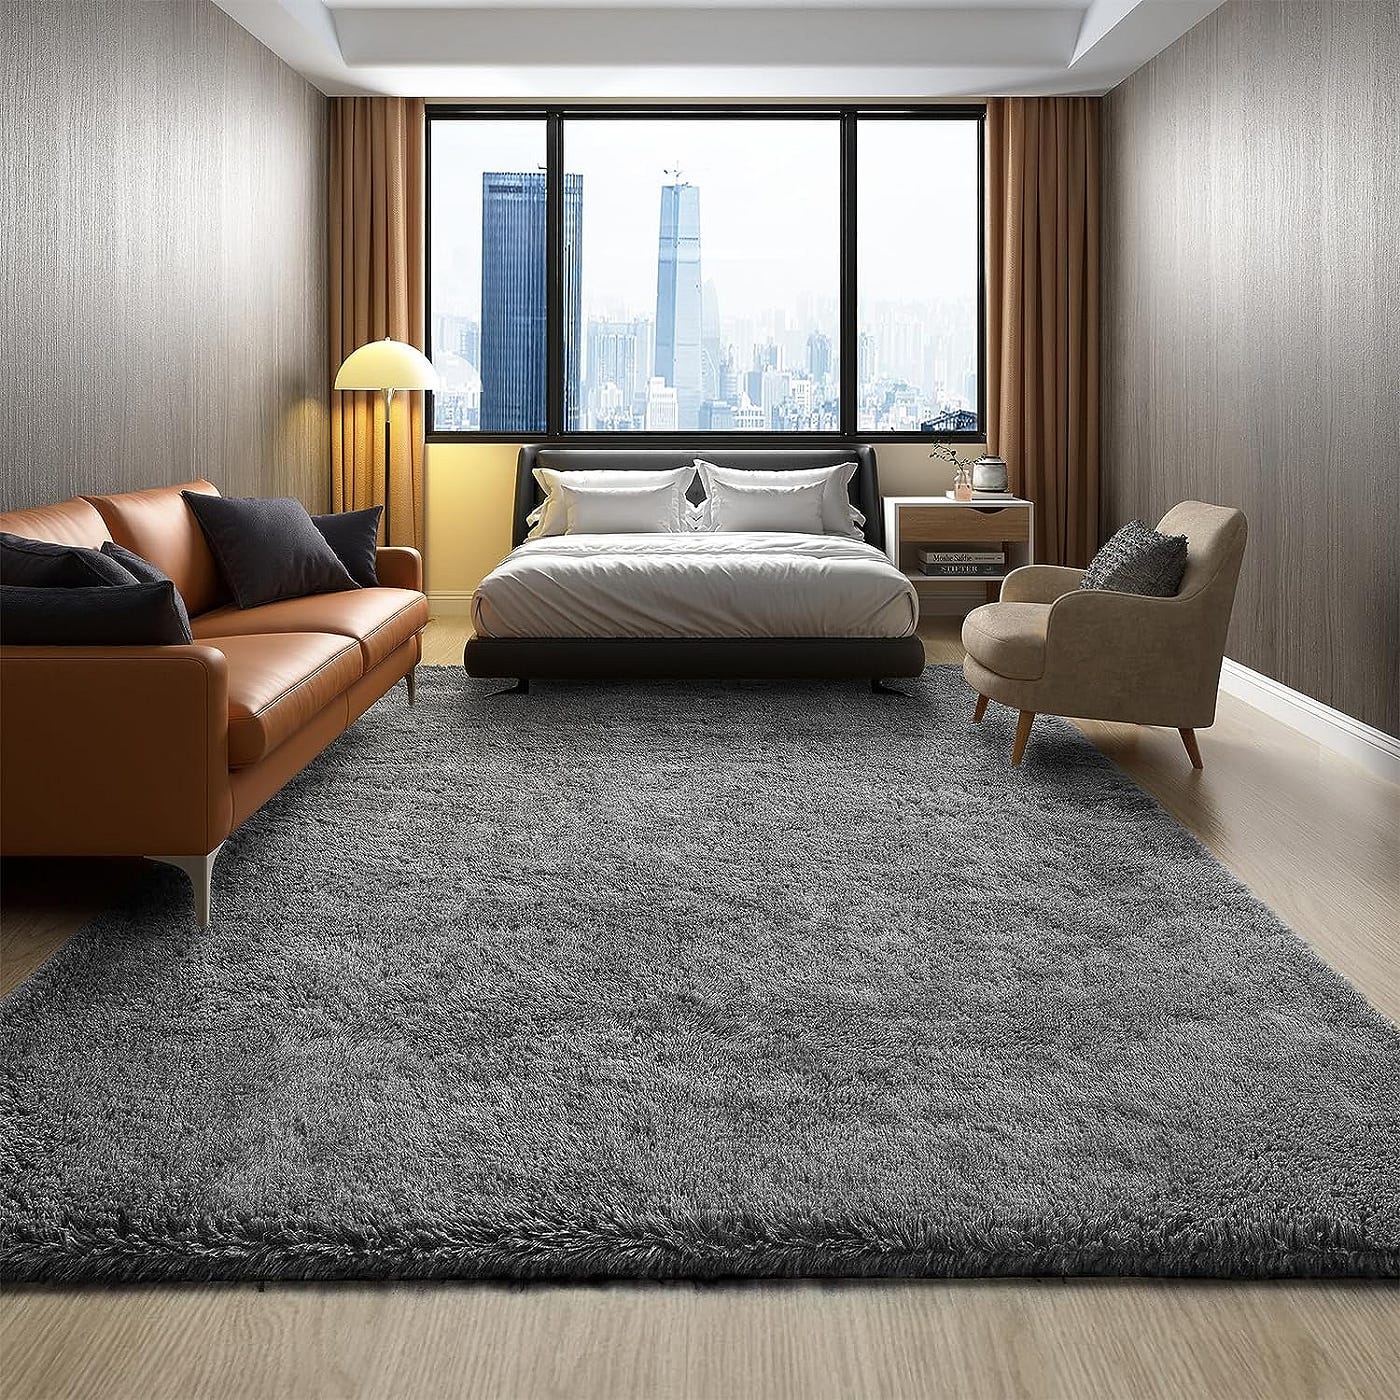 TWINNIS Luxury Fluffy Rugs Ultra Soft Shag Rug Carpet for Bedroom Living  Room,Kids Room, Nursery,4x5.3 Feet,Black 